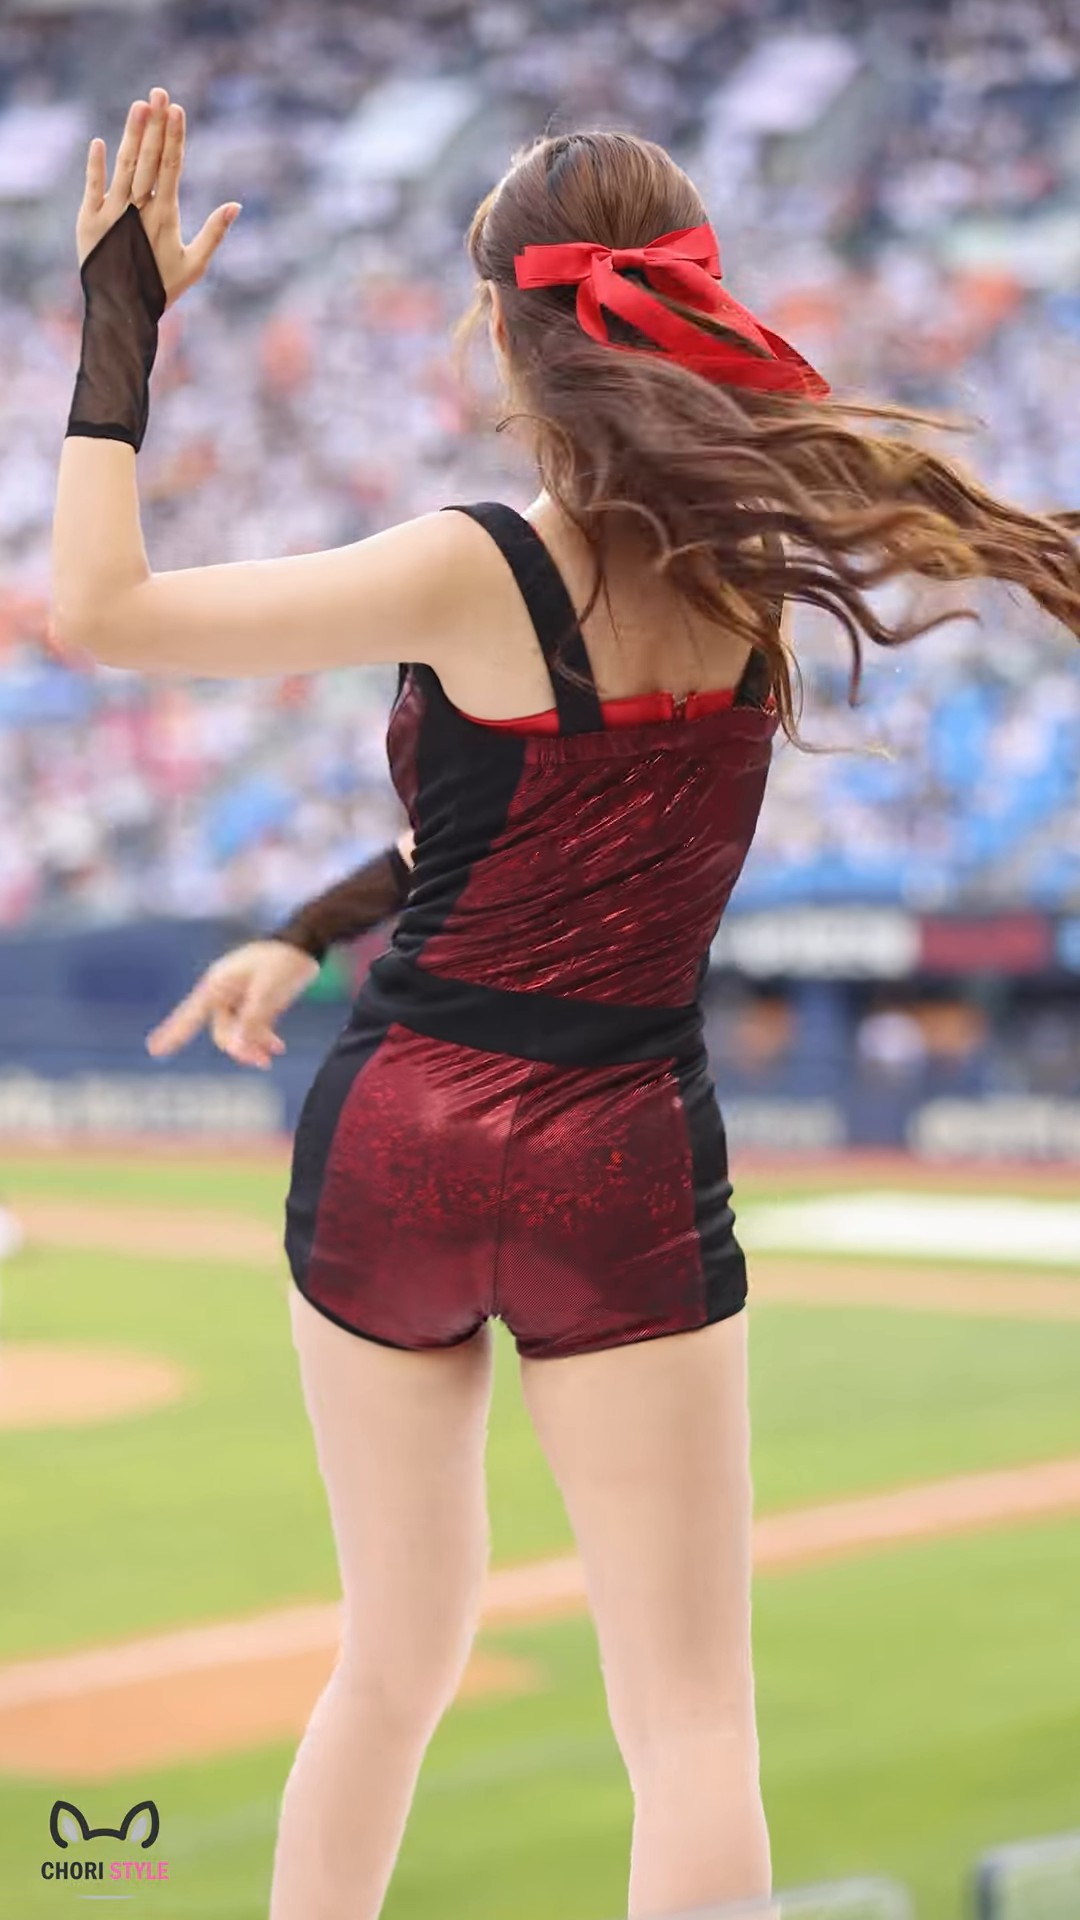 Kim Doa,Korean cherrleader,beautiful skin, butt 12